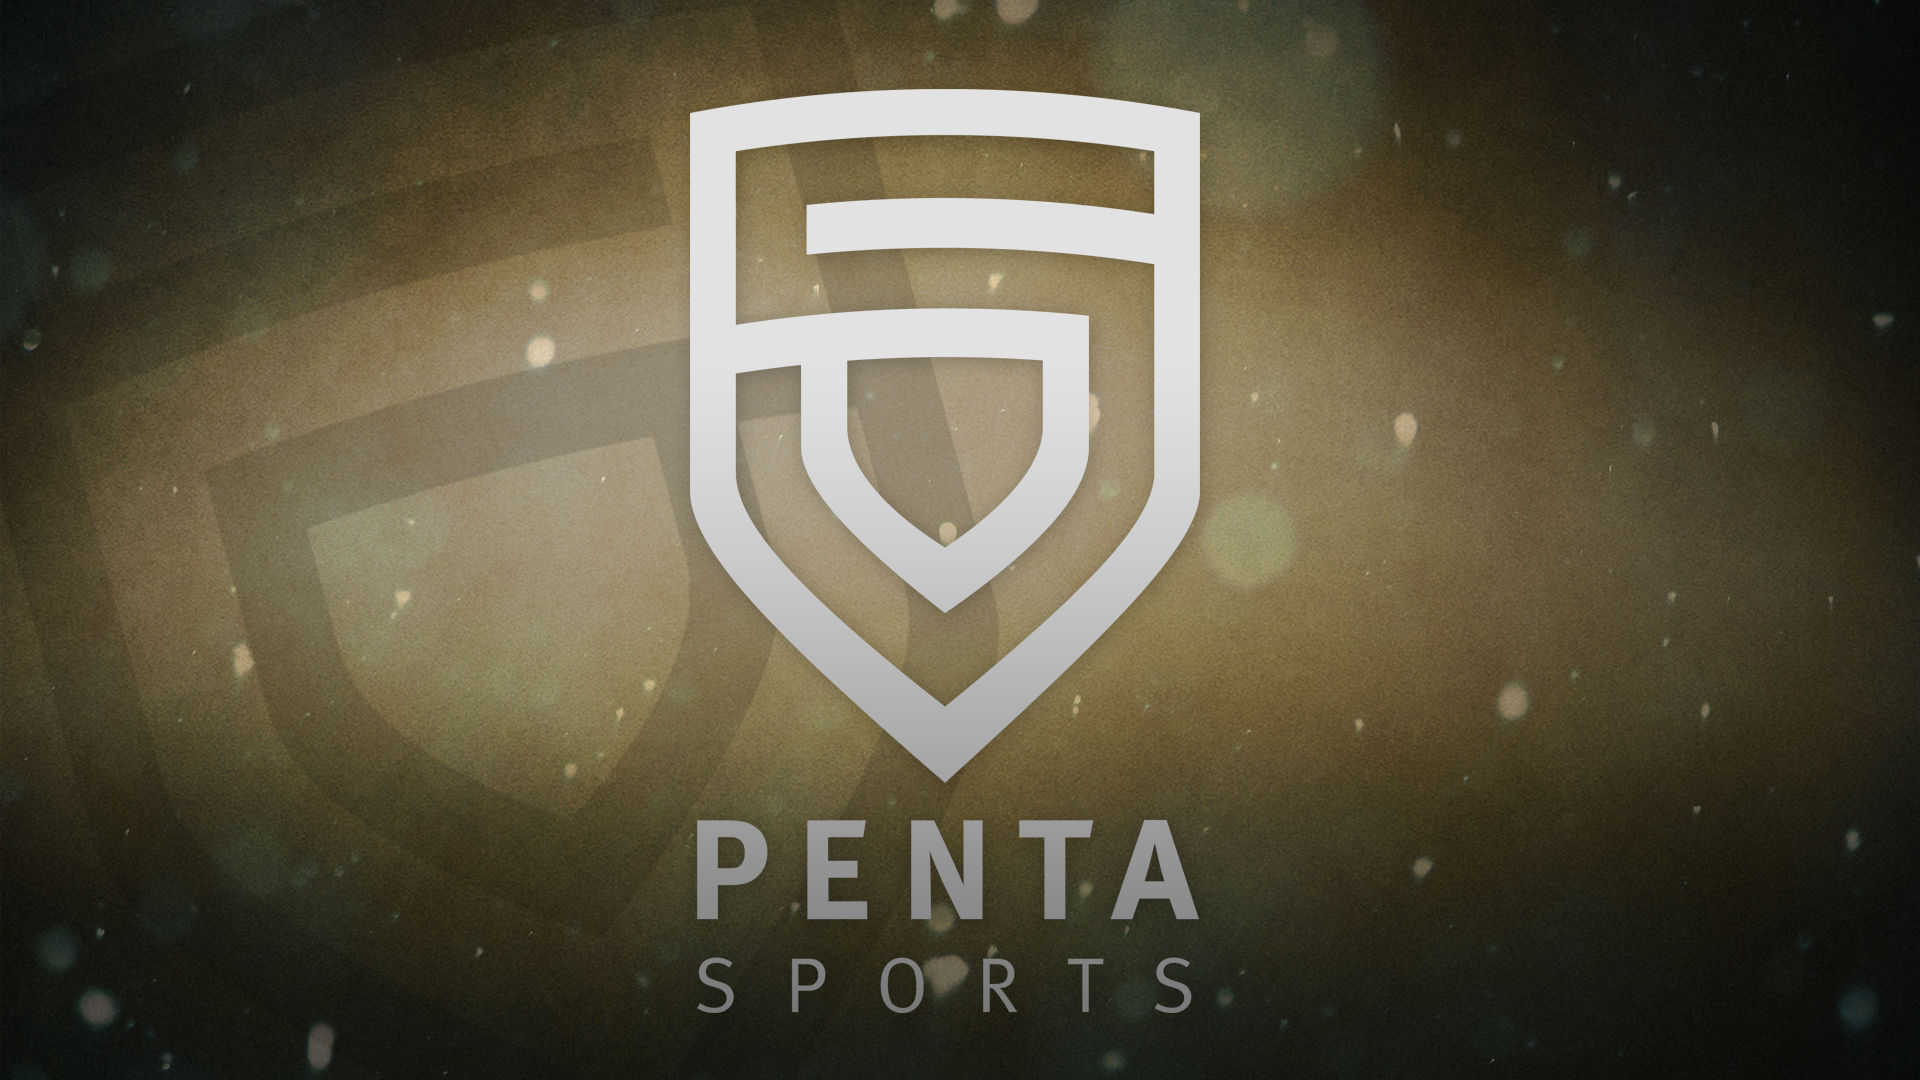 Пент 4. Penta Sports Катовице 2015. Пента. Игра Пента. Лого Пента Спортс.